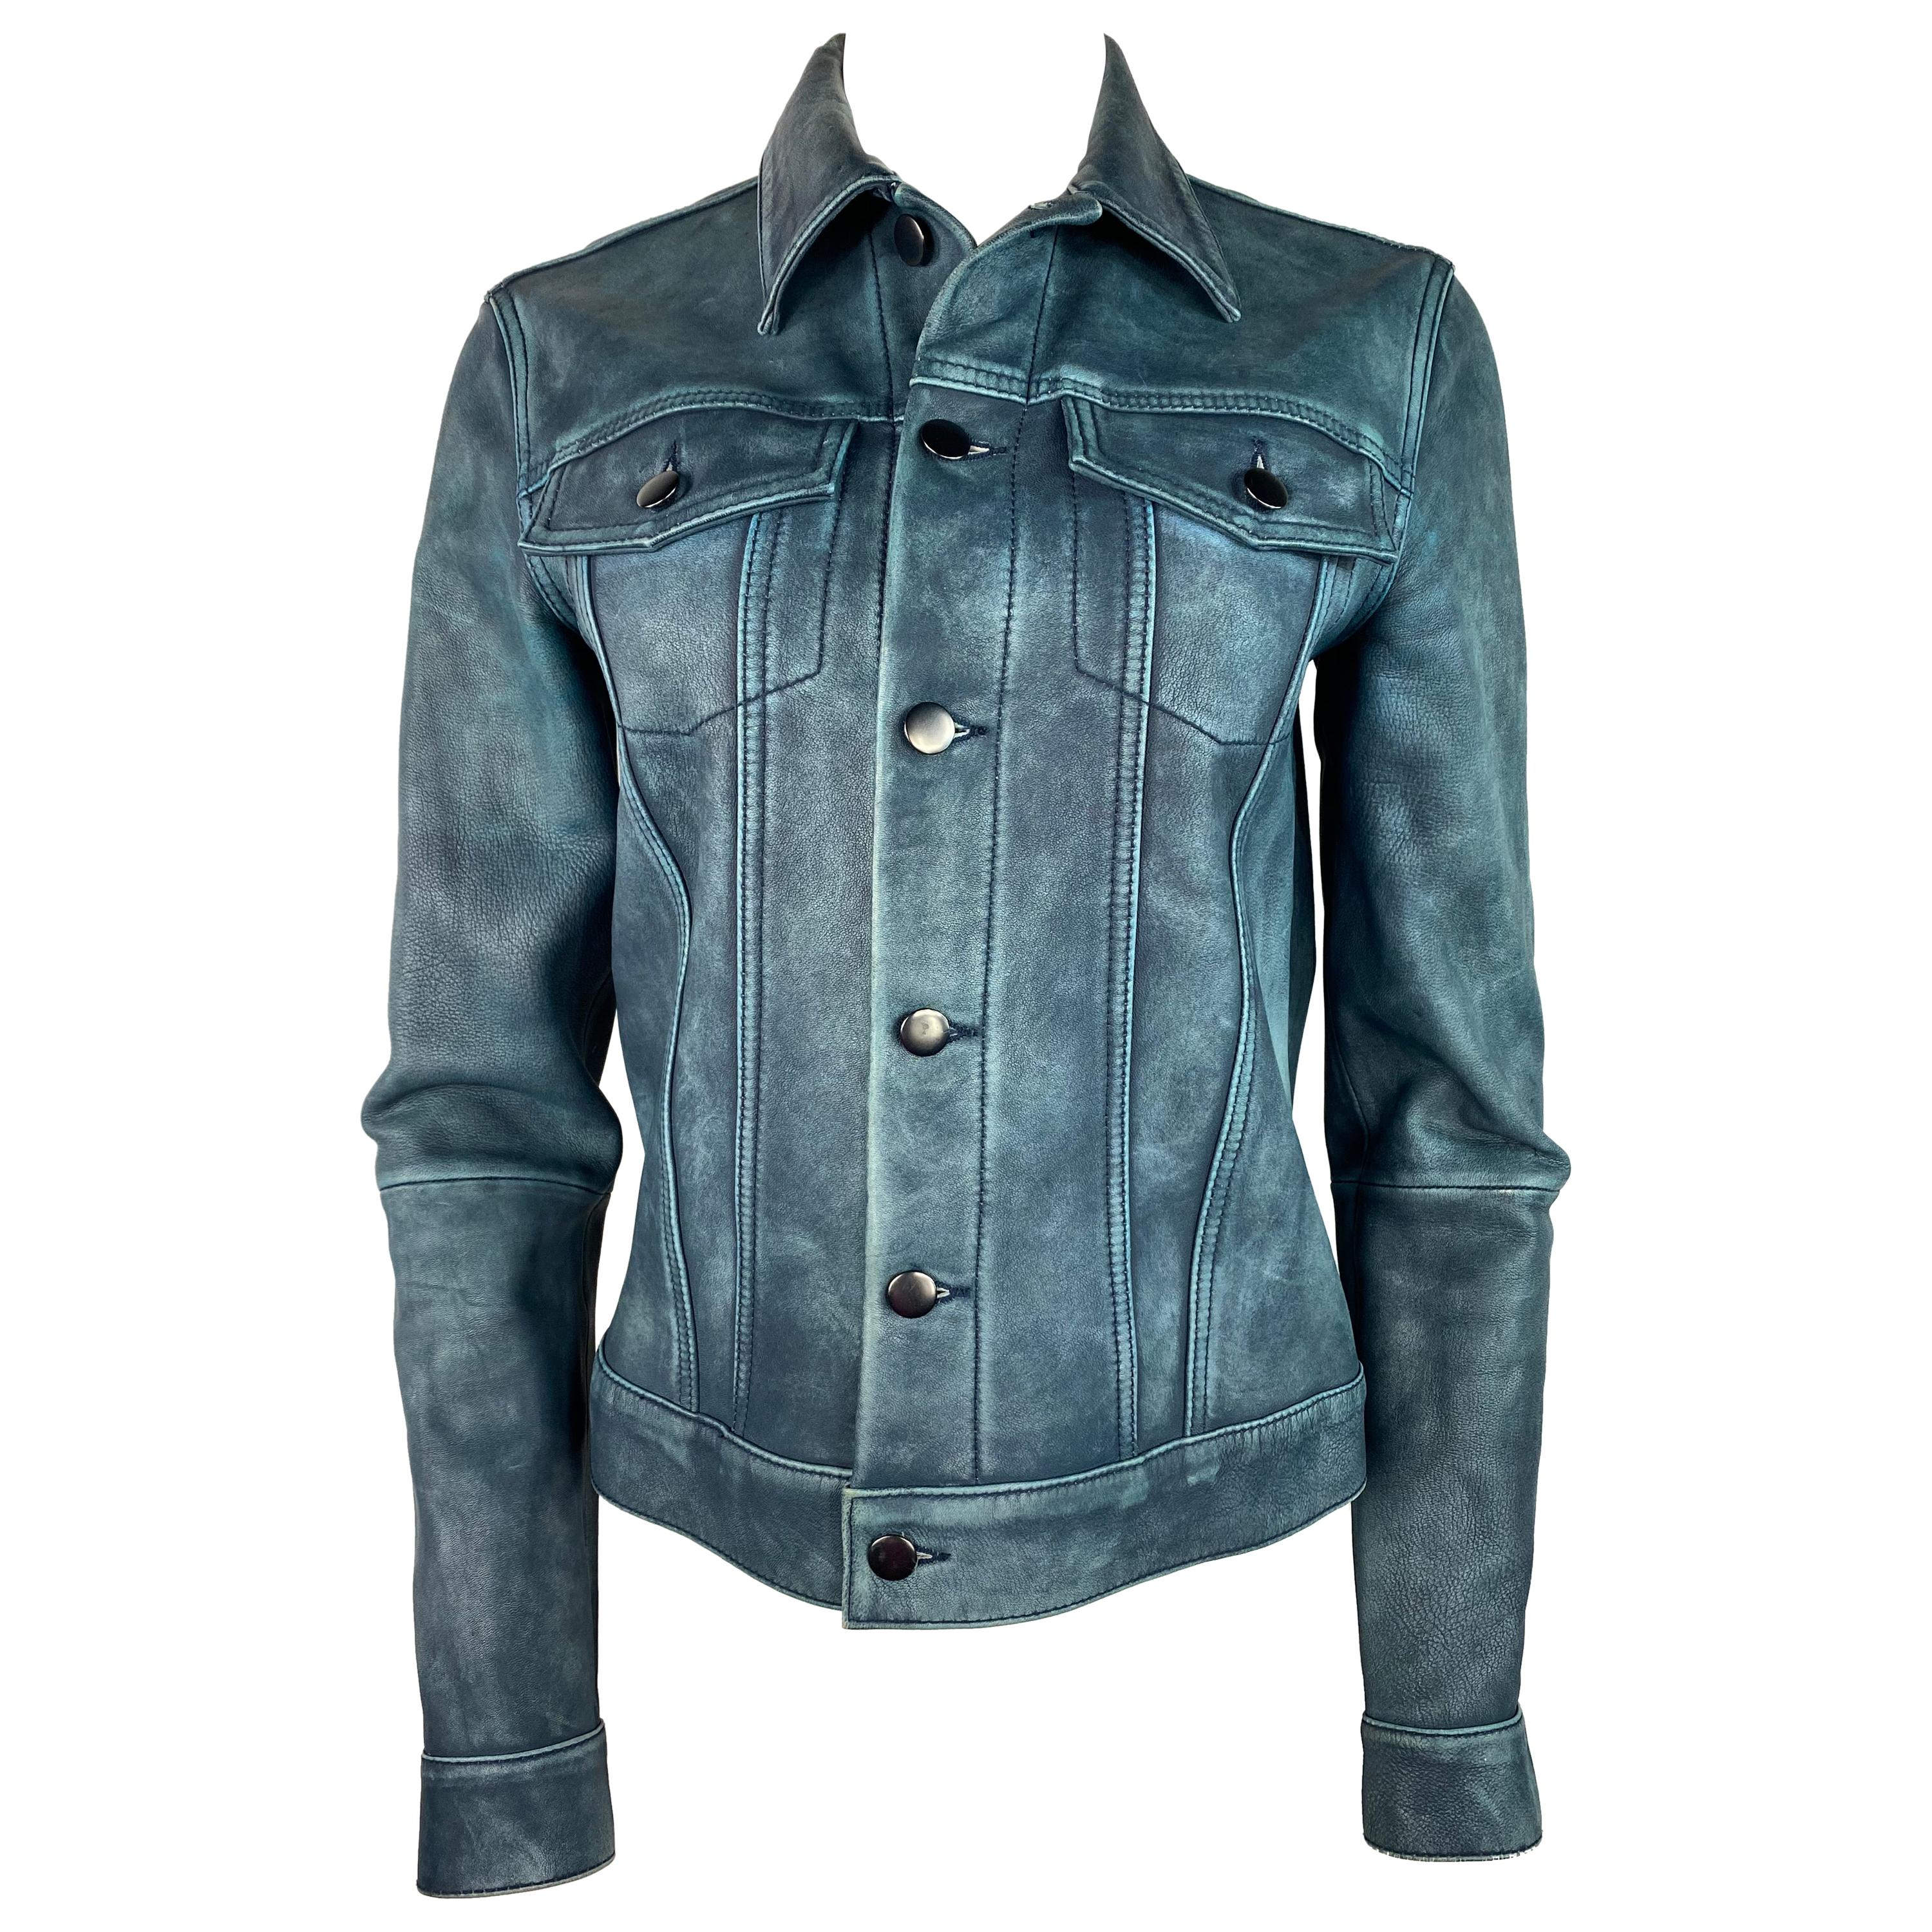 Derek Lam 10 Crosby Blue Leather Jacket, Size 4